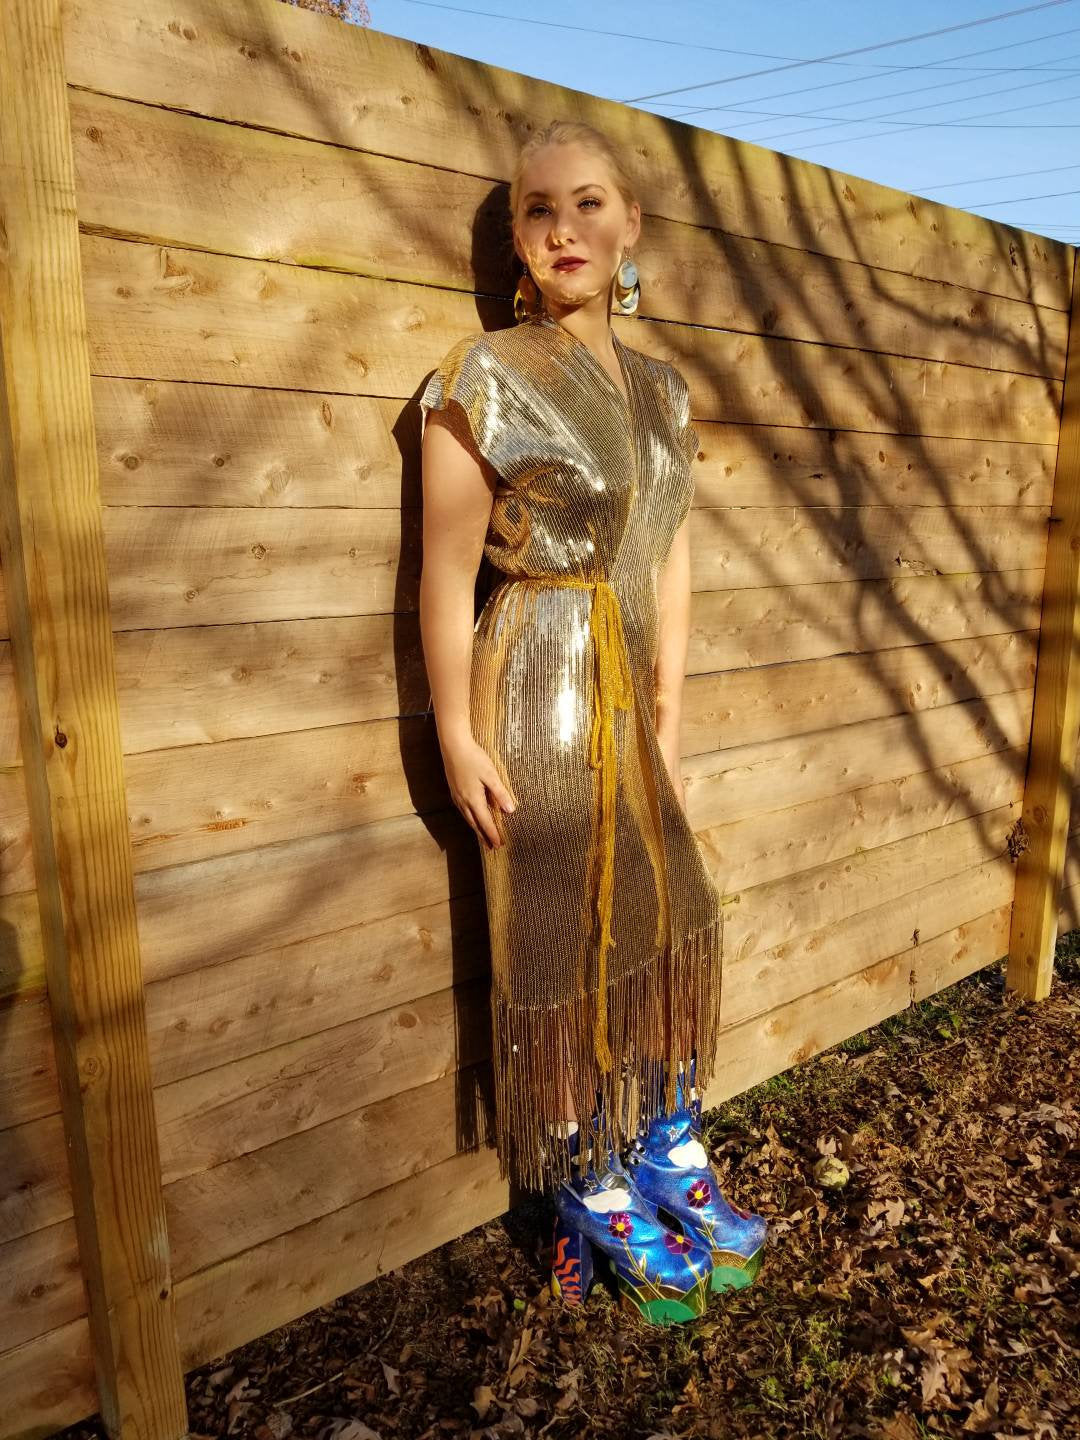 gold disco dress